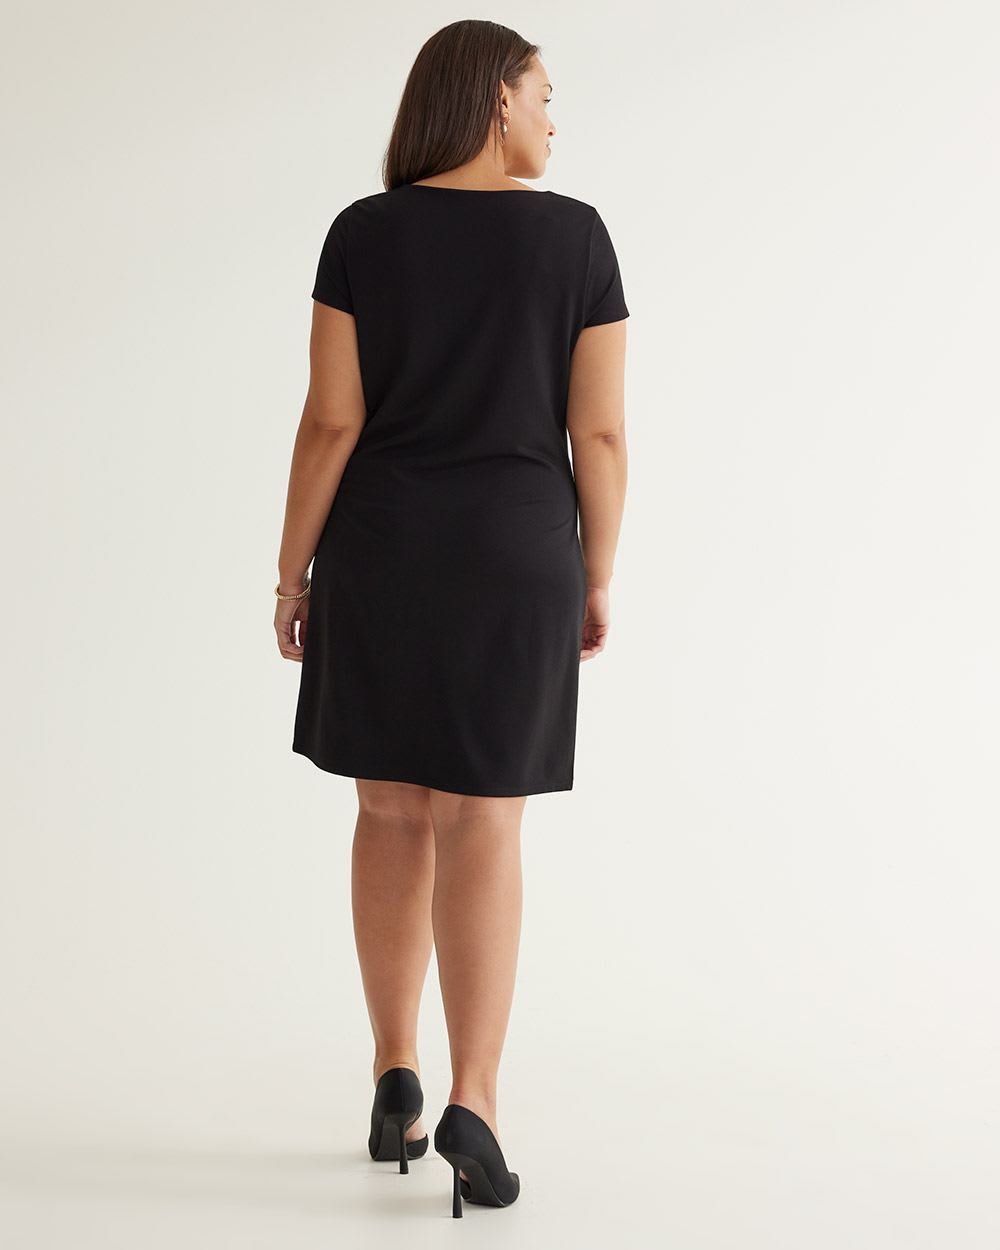 Buy SleekTrends Plus Size One Shoulder Asymmetrical Dress